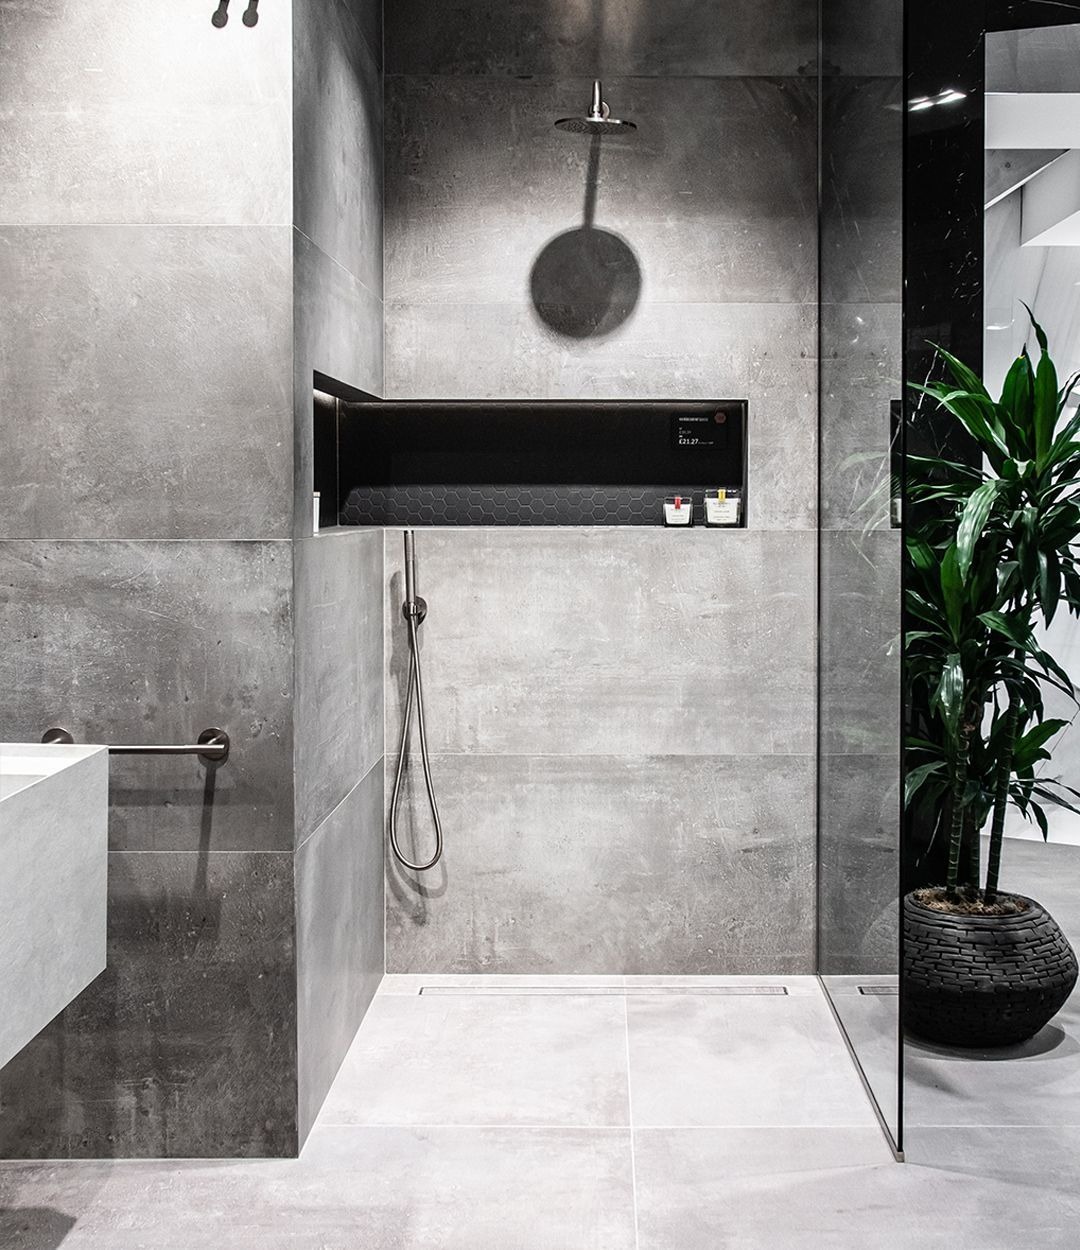 Luxurious Industrial Bathroom with Black Shower Niche